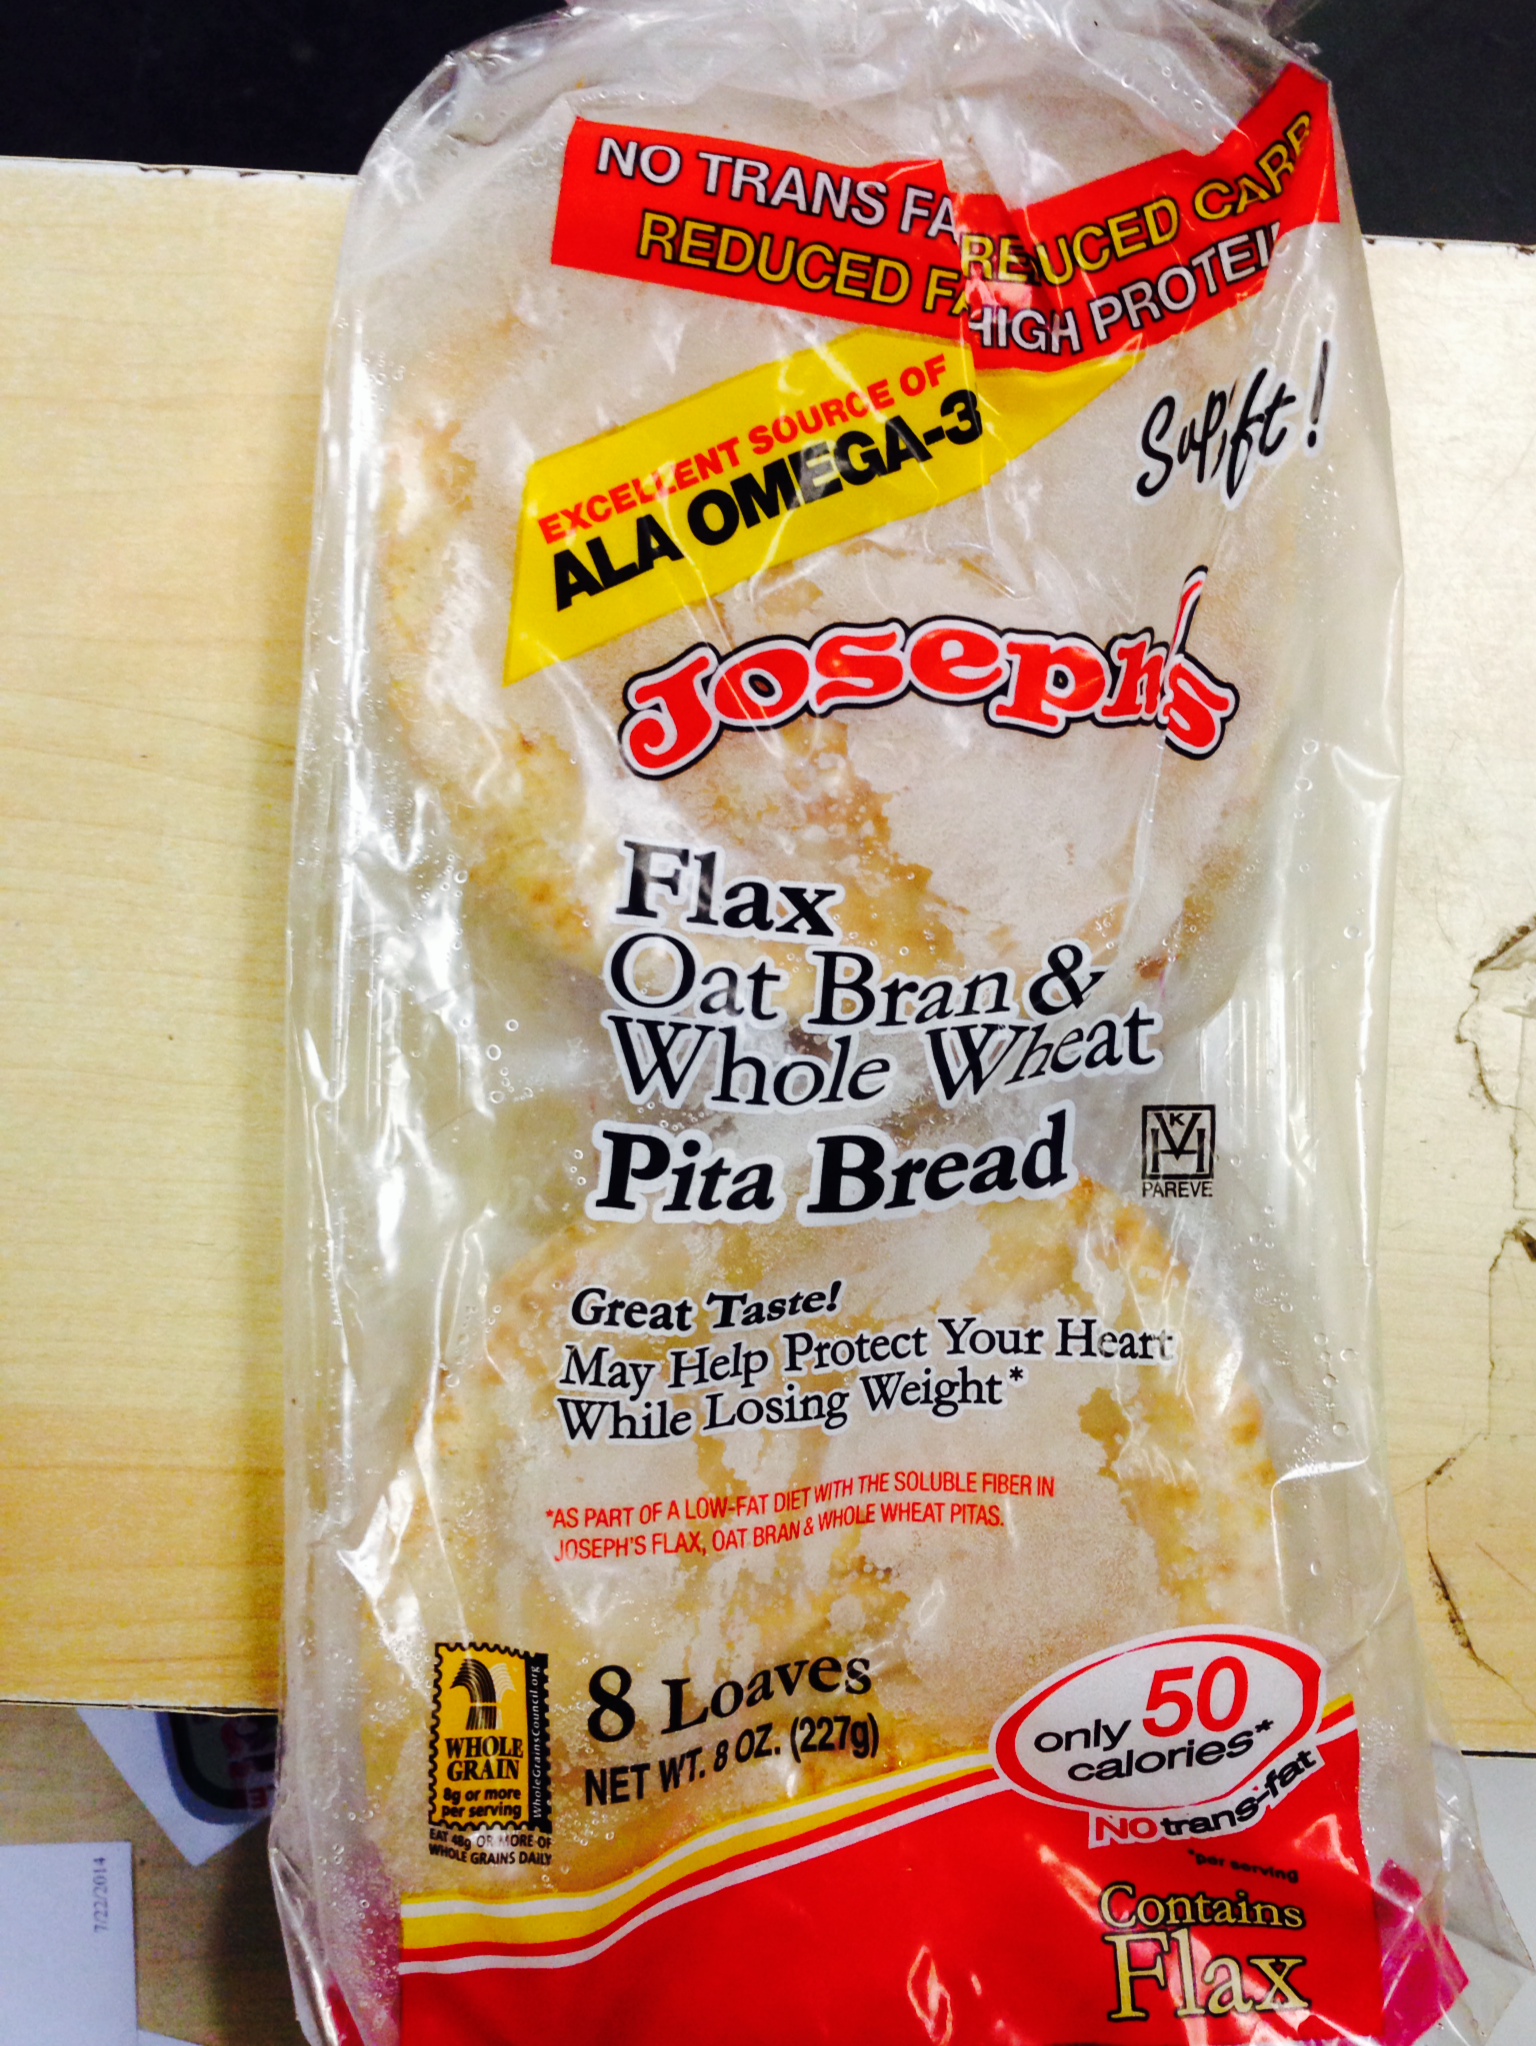 Joseph's Flax Oat Bran Whole Wheat Mini Pita bag of 8 - Lo ...